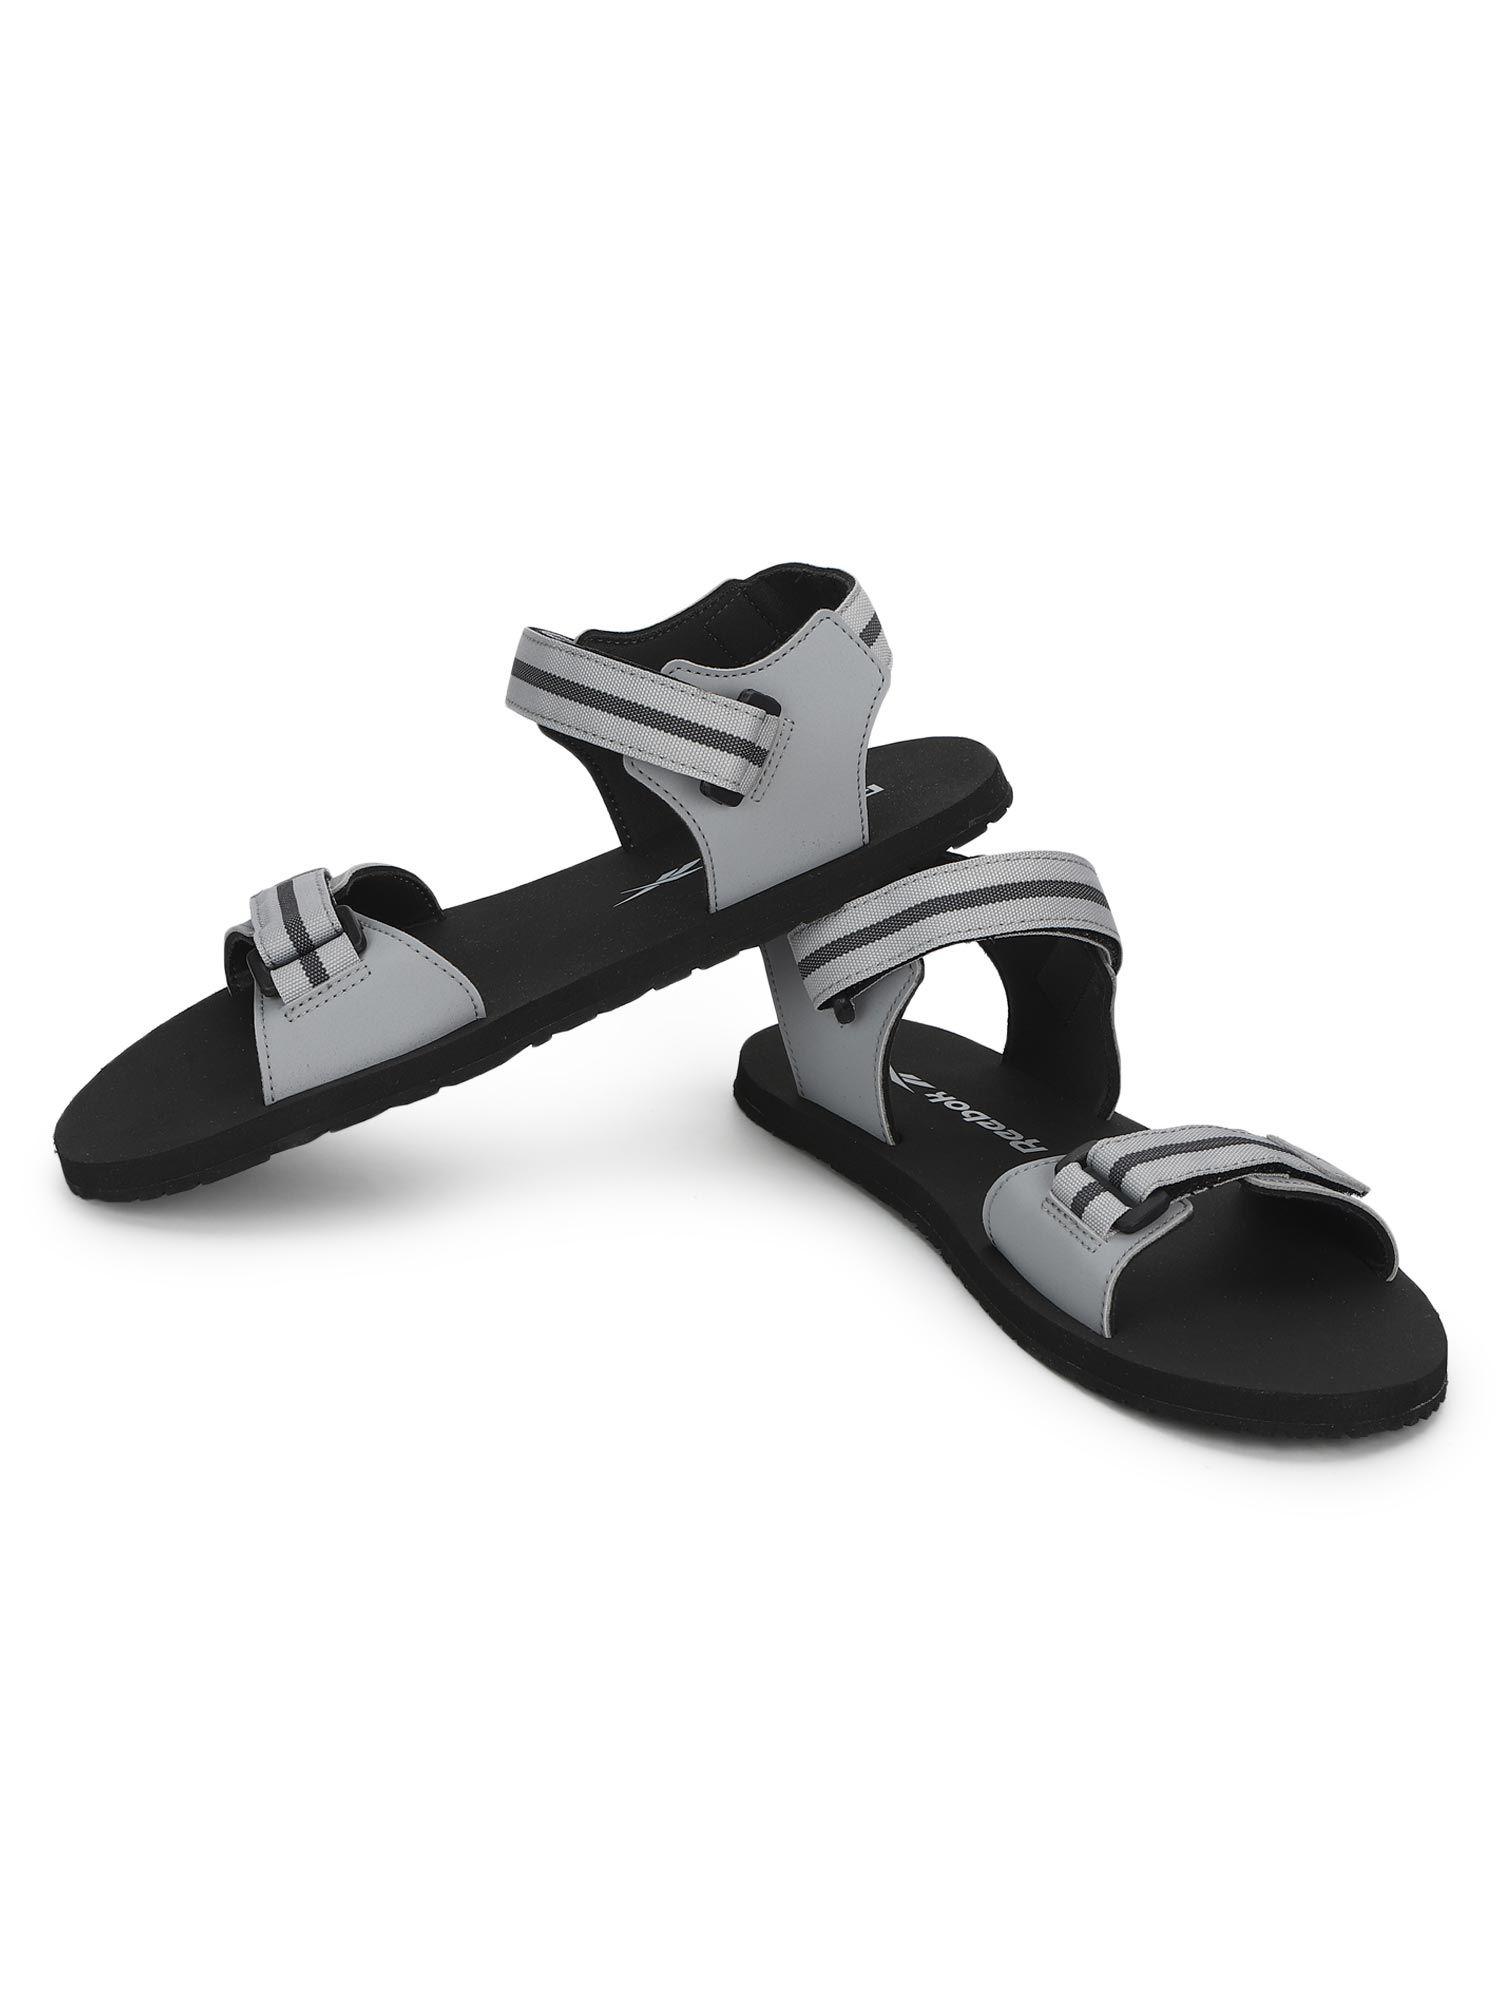 epic-sandal-grey-sandals